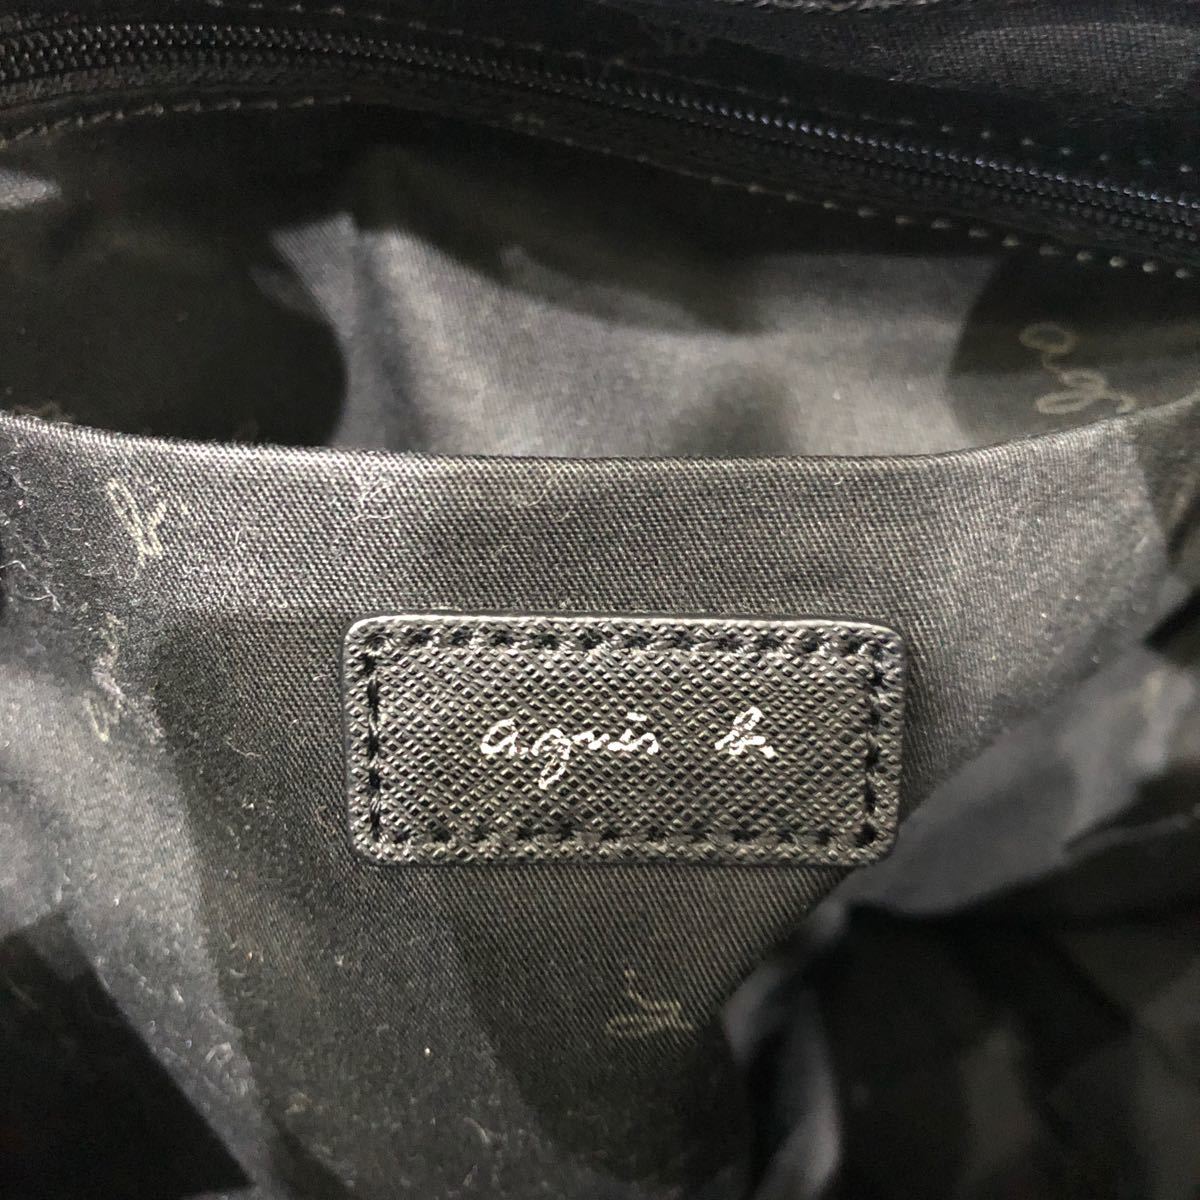 agnes b VOYAGE Agnes B handbag neat's leather 100% black one shoulder bag shoulder ..GS23 pouch bag silver metal fittings beautiful goods 